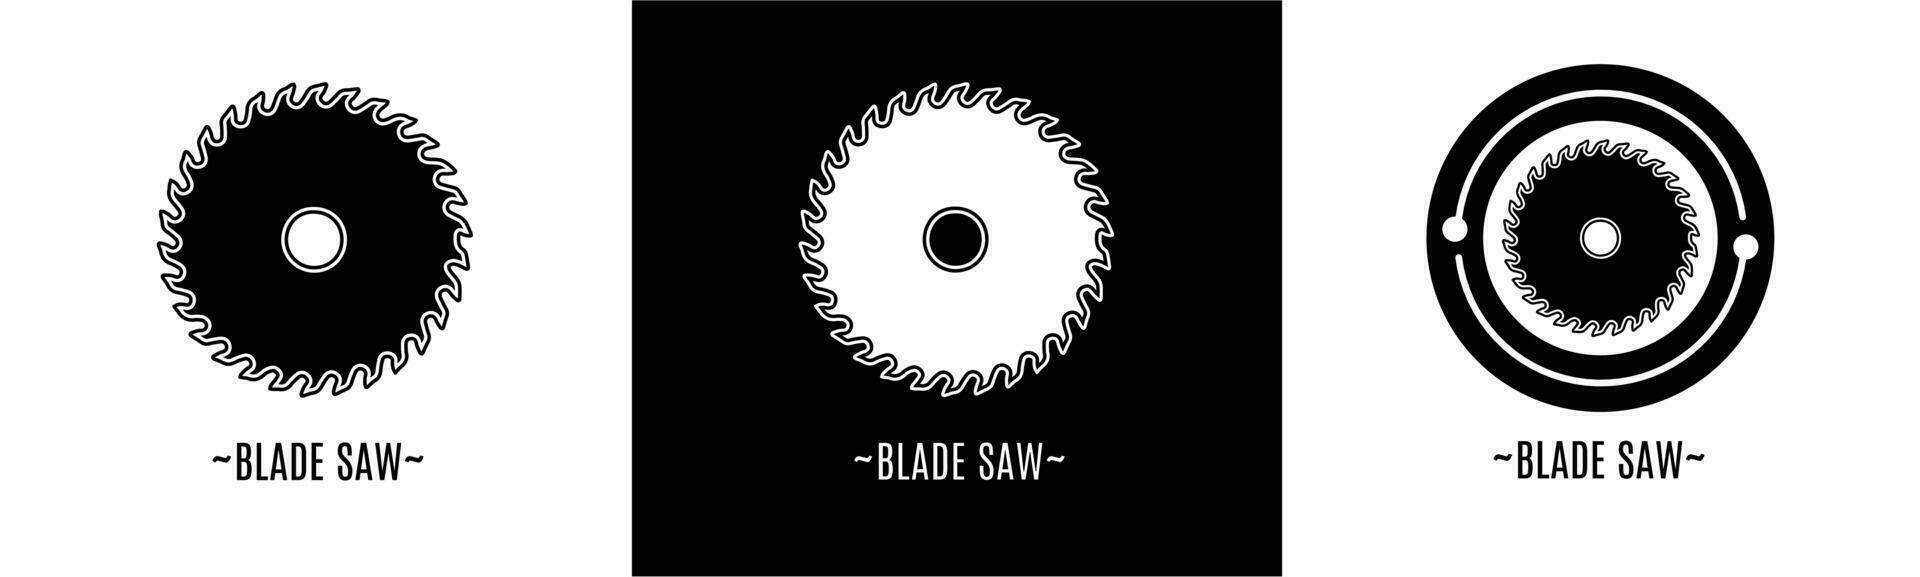 Blade saw logo set. Collection of black and white logos. Stock vector. vector